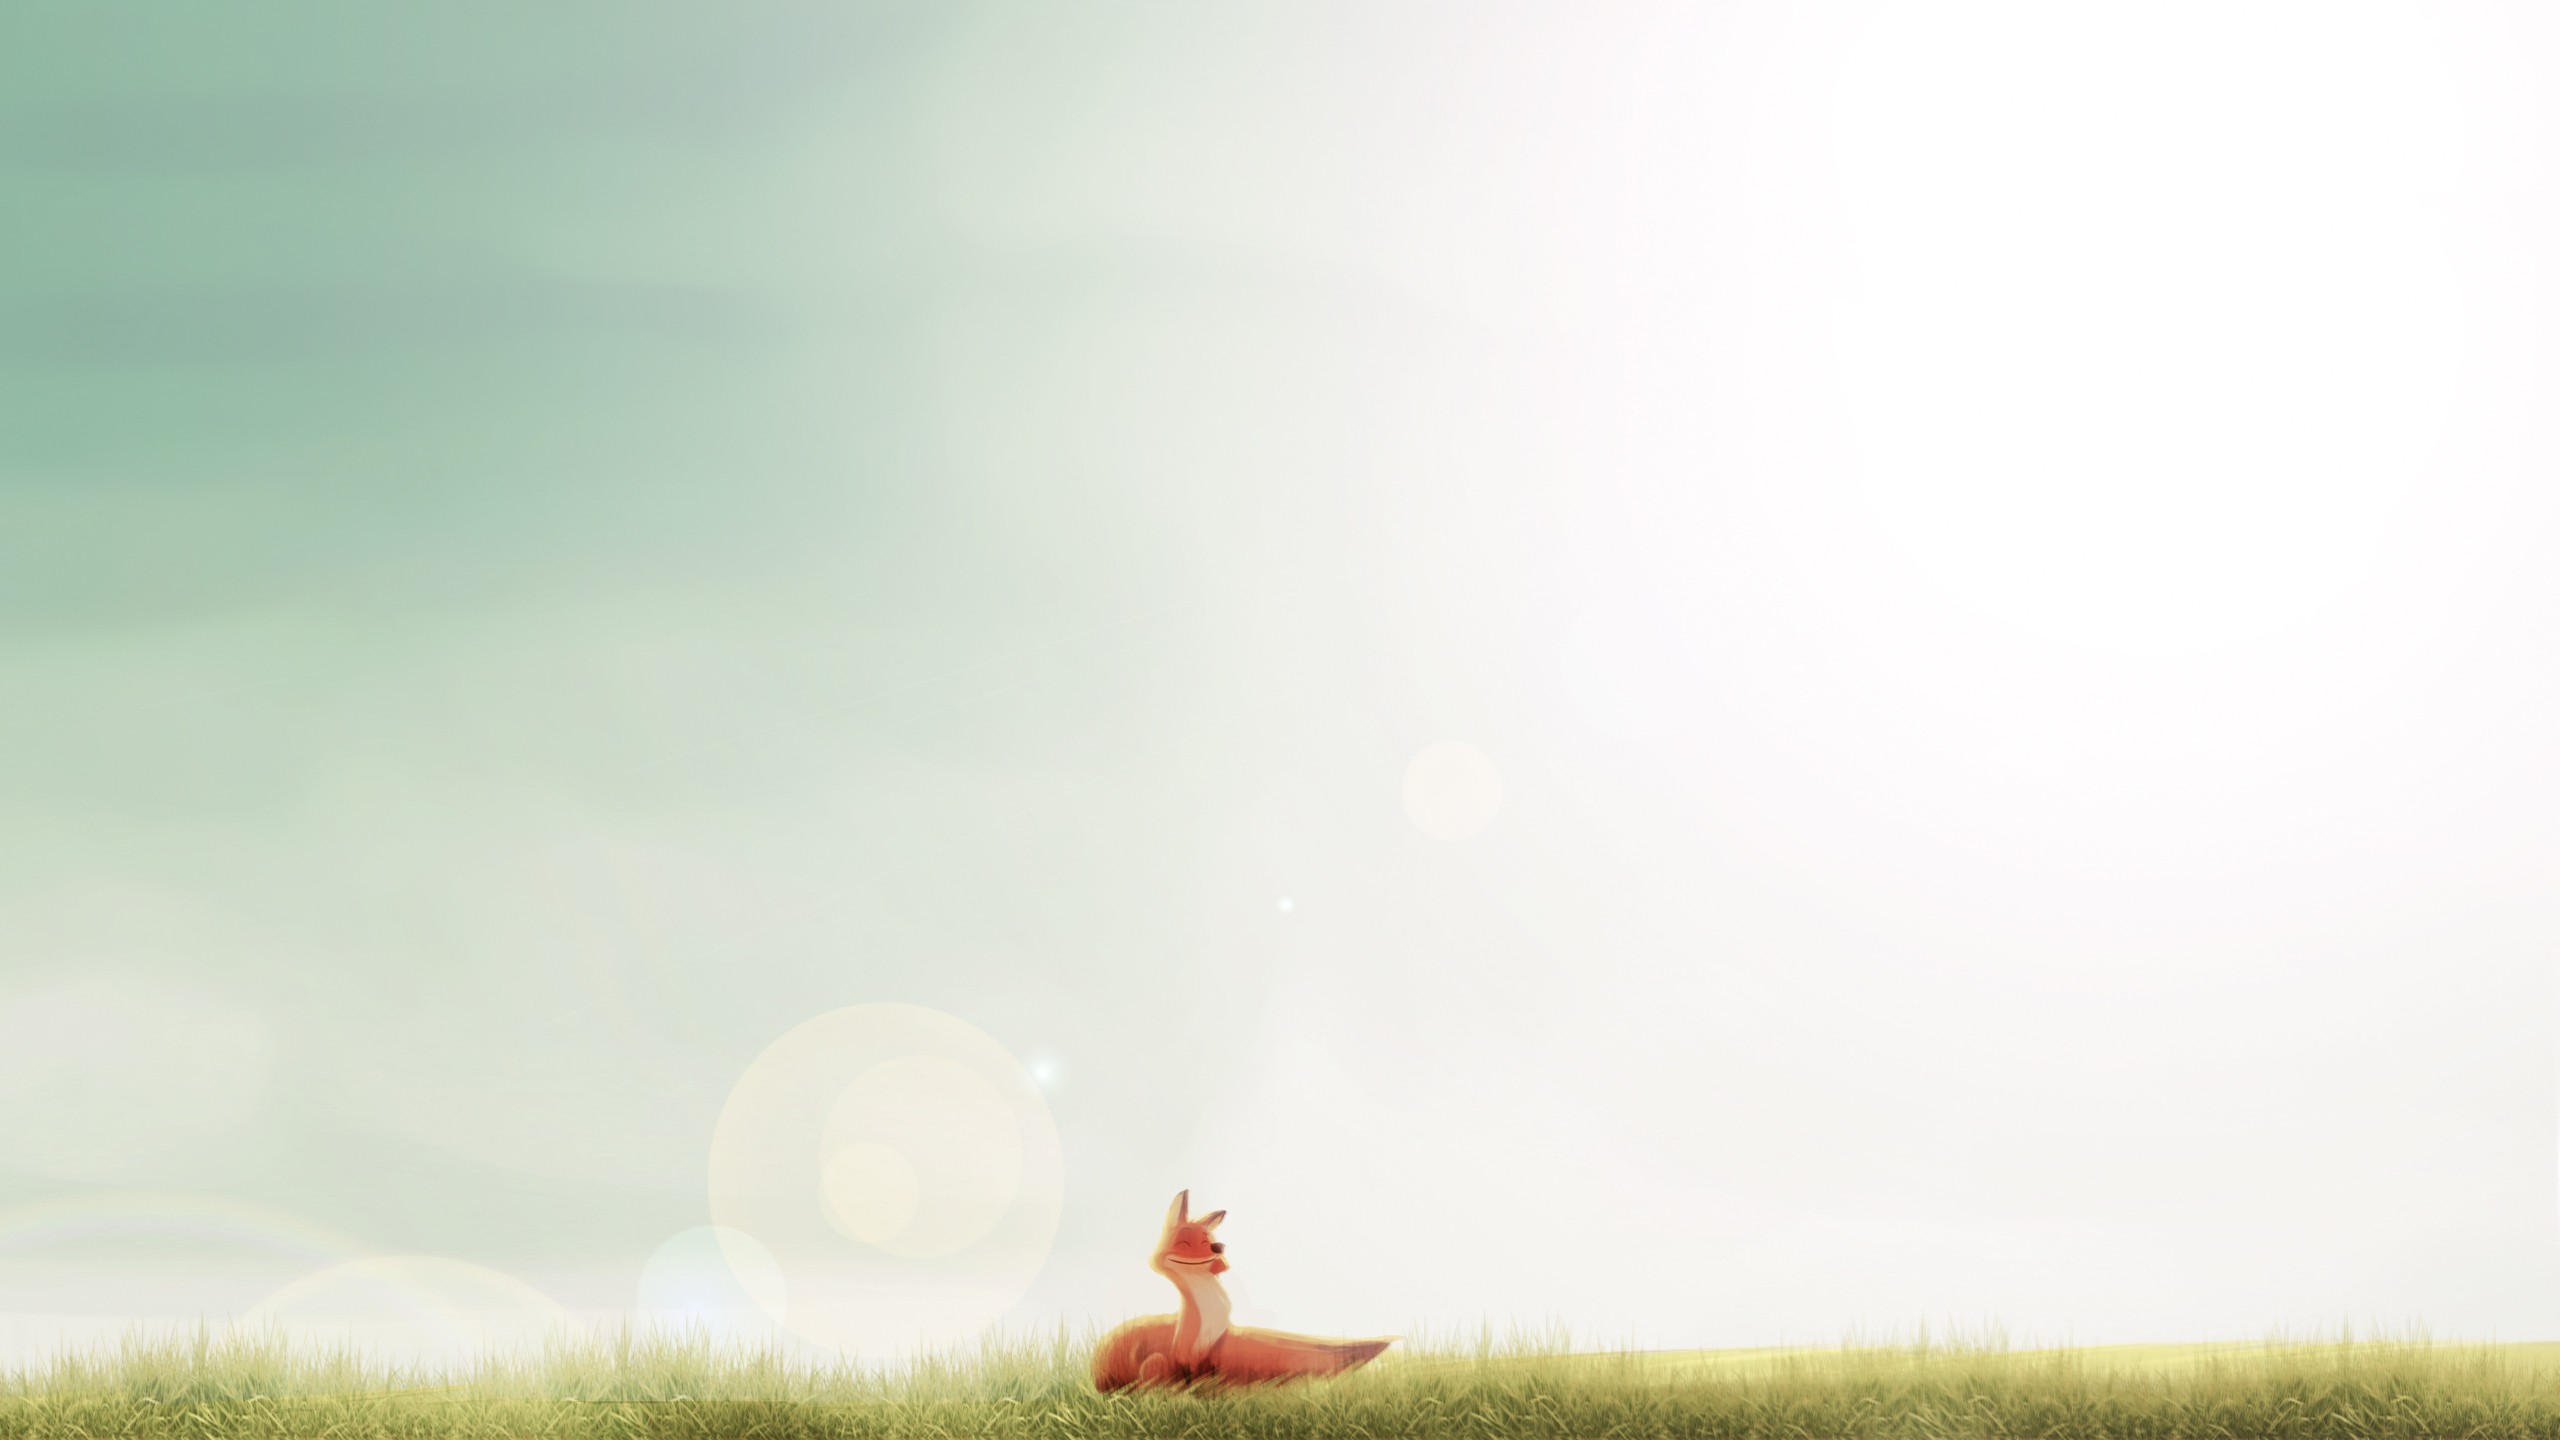 General 2560x1440 fox minimalism sunlight smiling happy animals mammals sky artwork